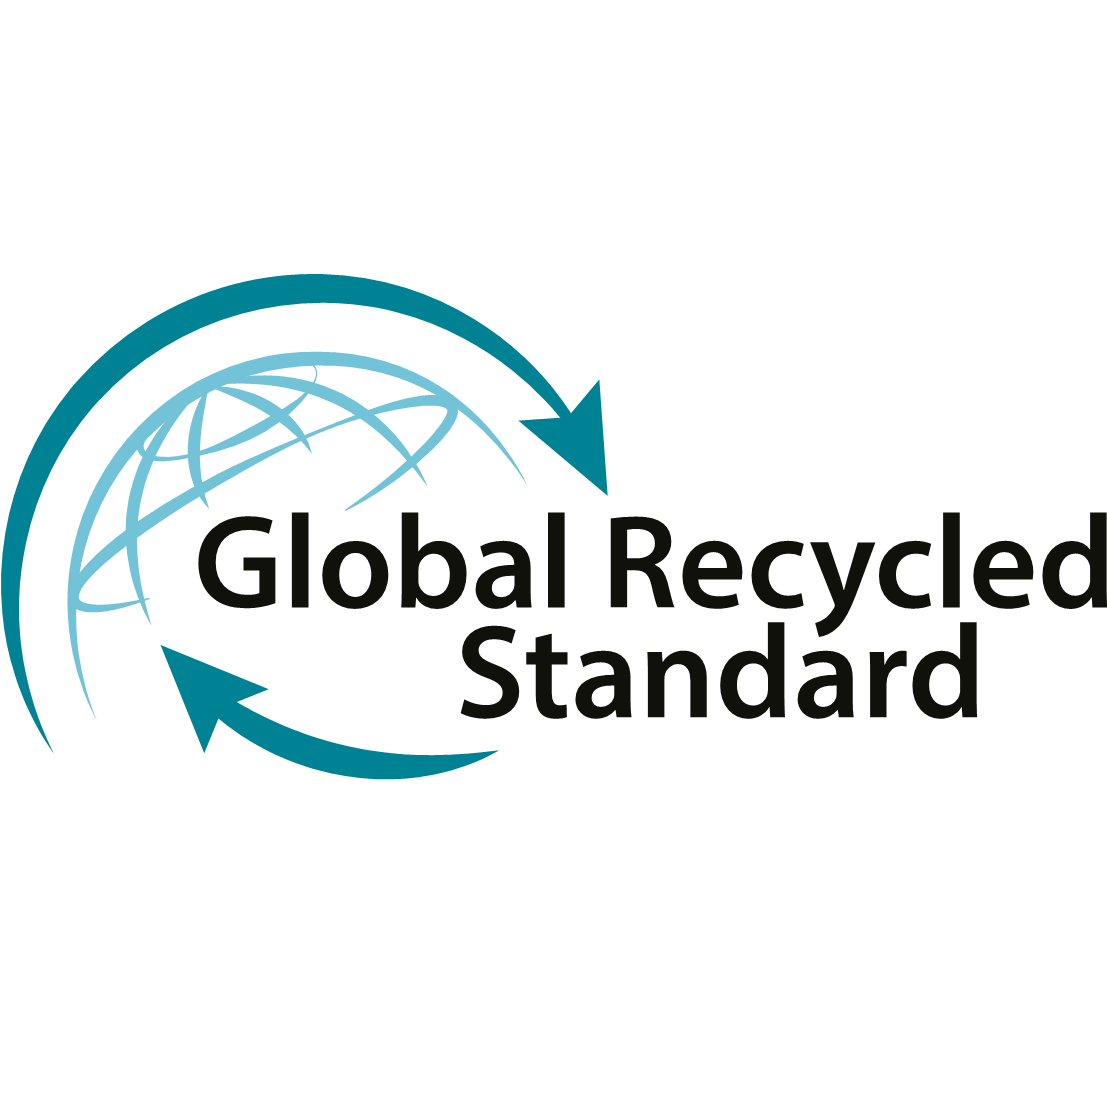 Global Recycled Standard certifikat